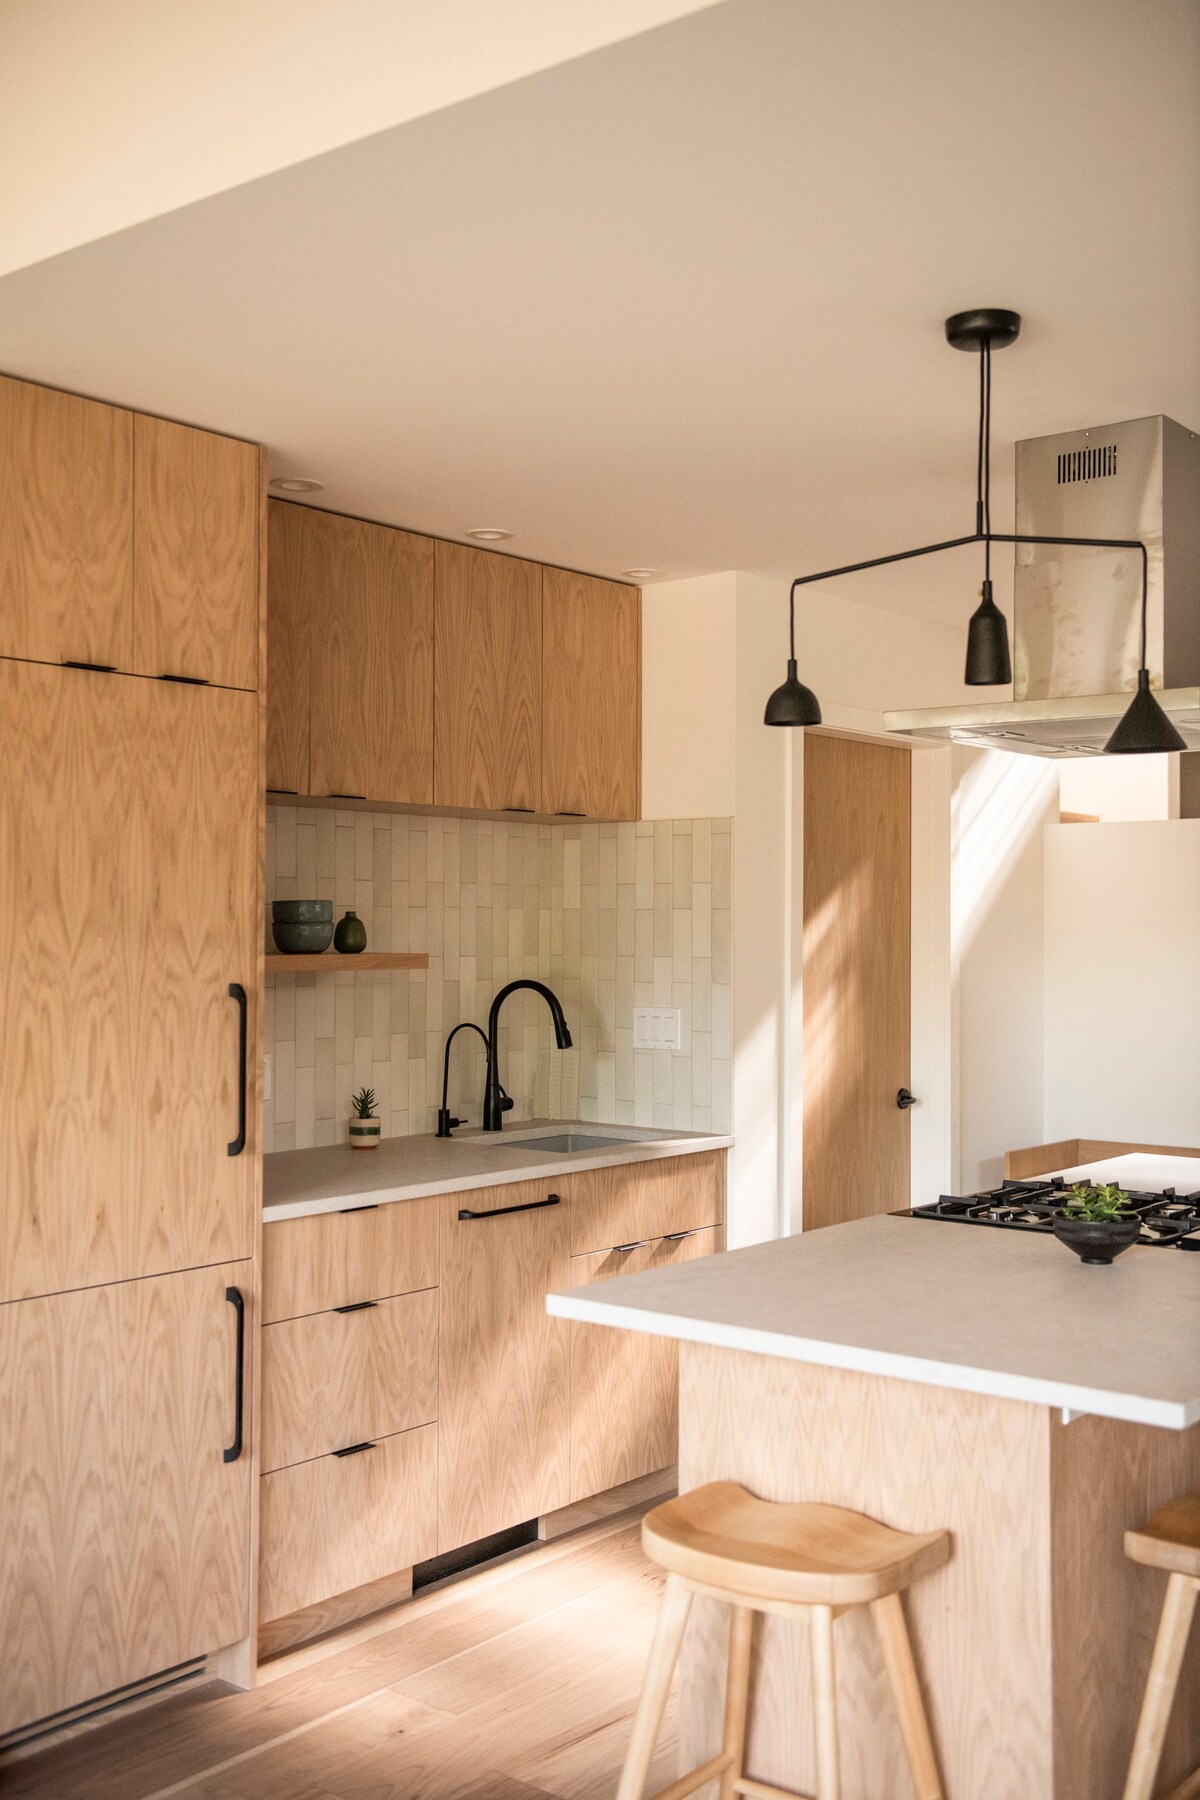 Brand New Designer Suite in Architectural Home